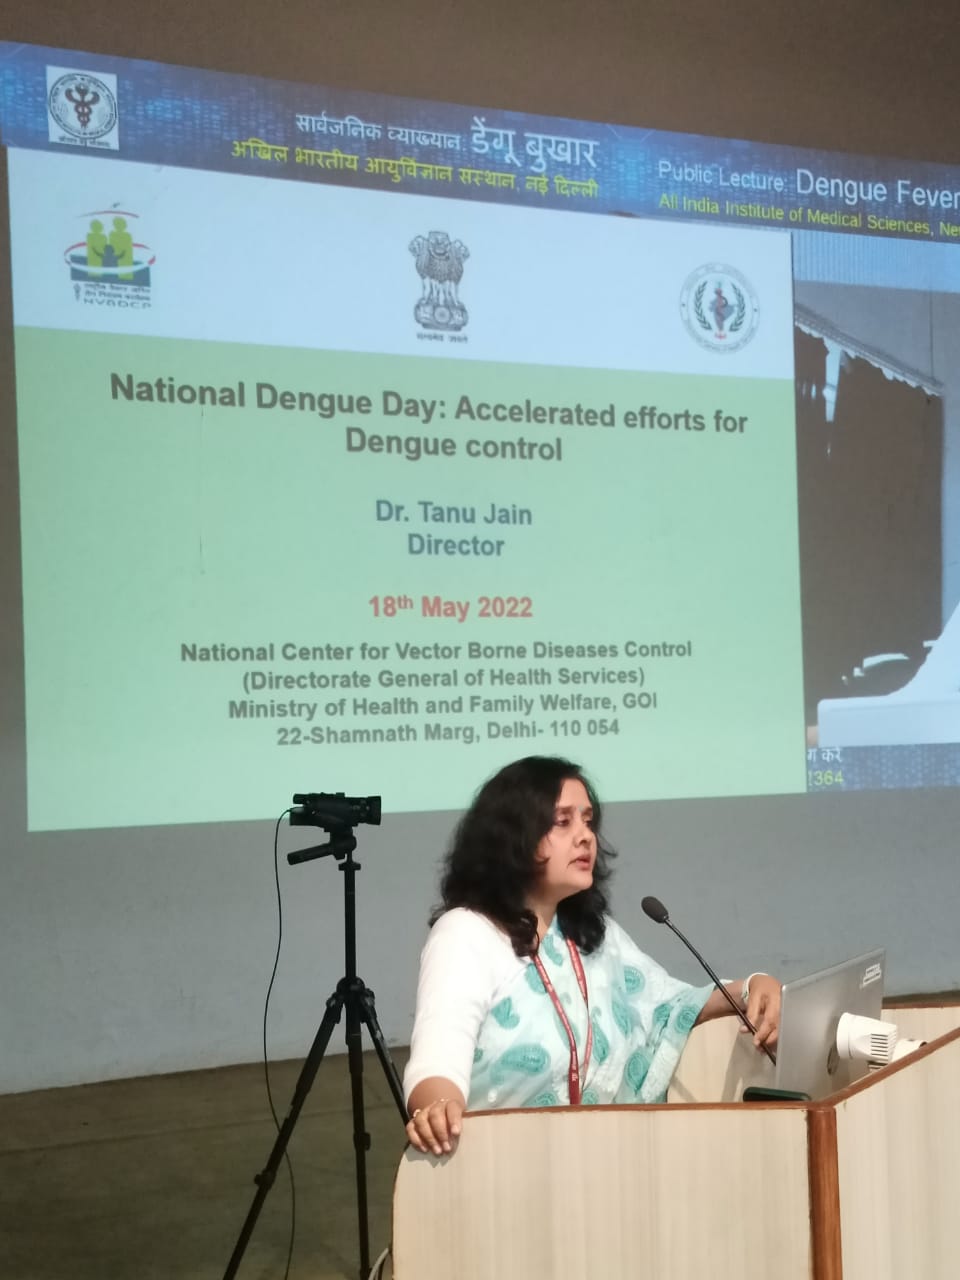 Observation of 7th National Dengue Day 18th May 2022 at Jawaharlal Nehru Auditorium, AIIMS,New Delhi